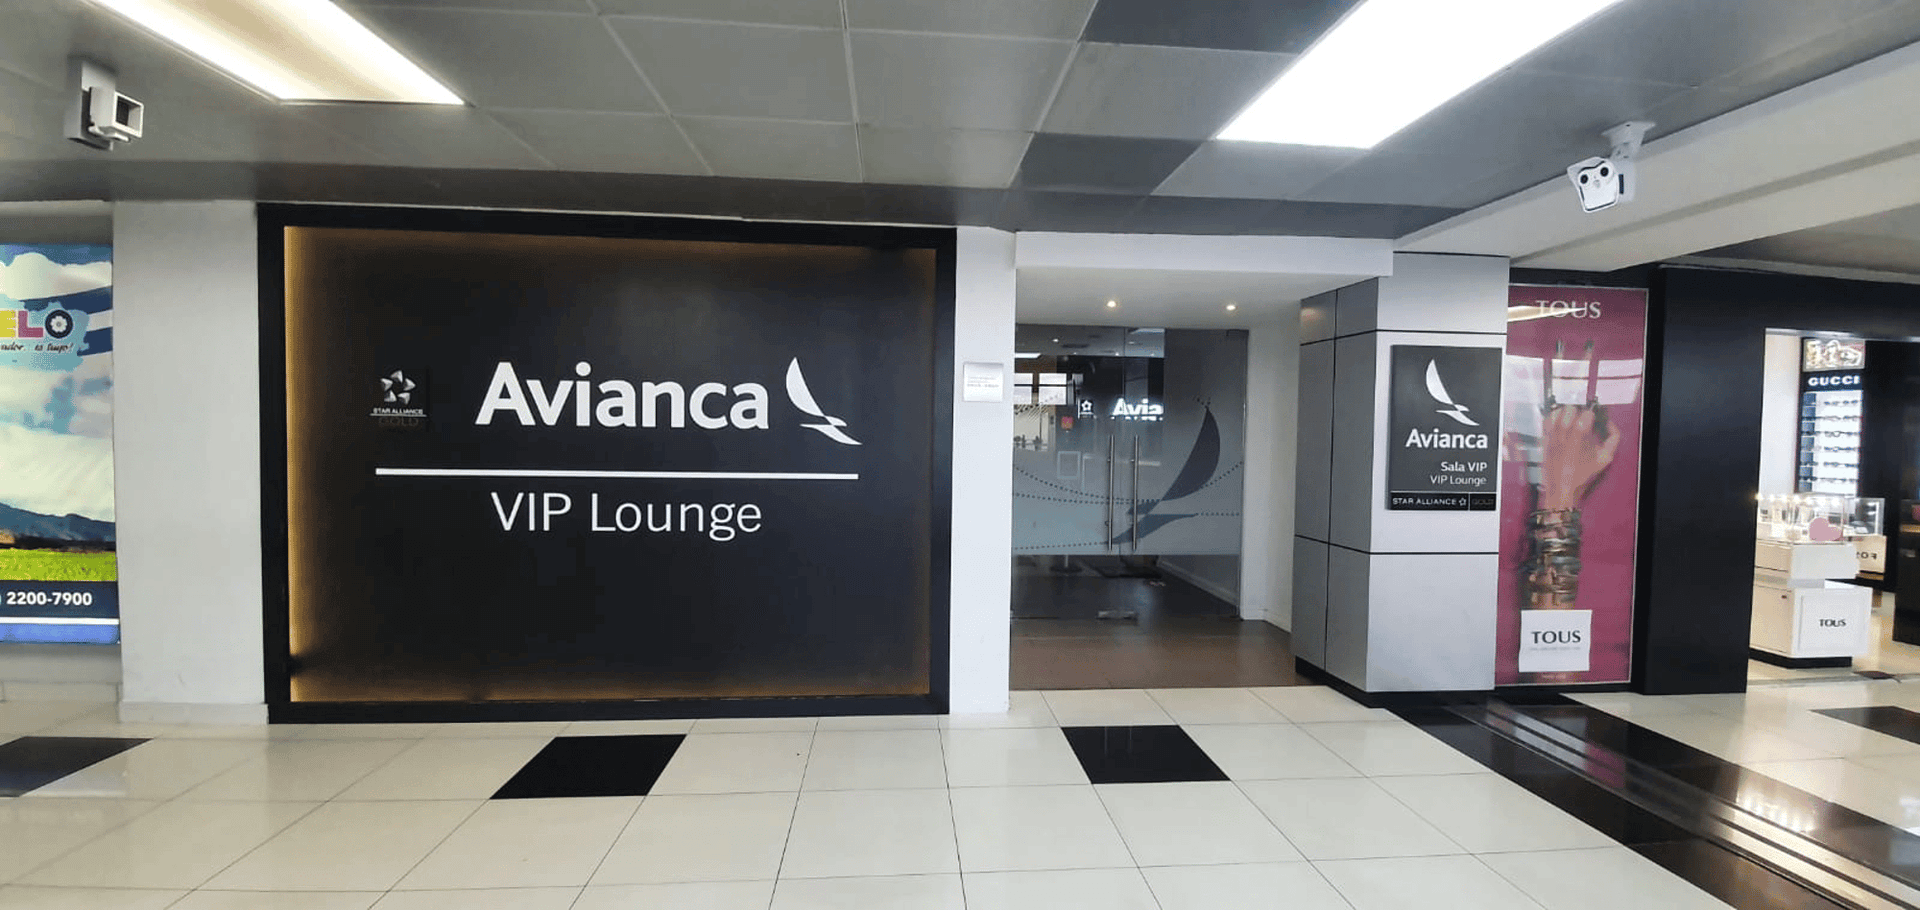 Avianca Sala VIP image 22 of 26